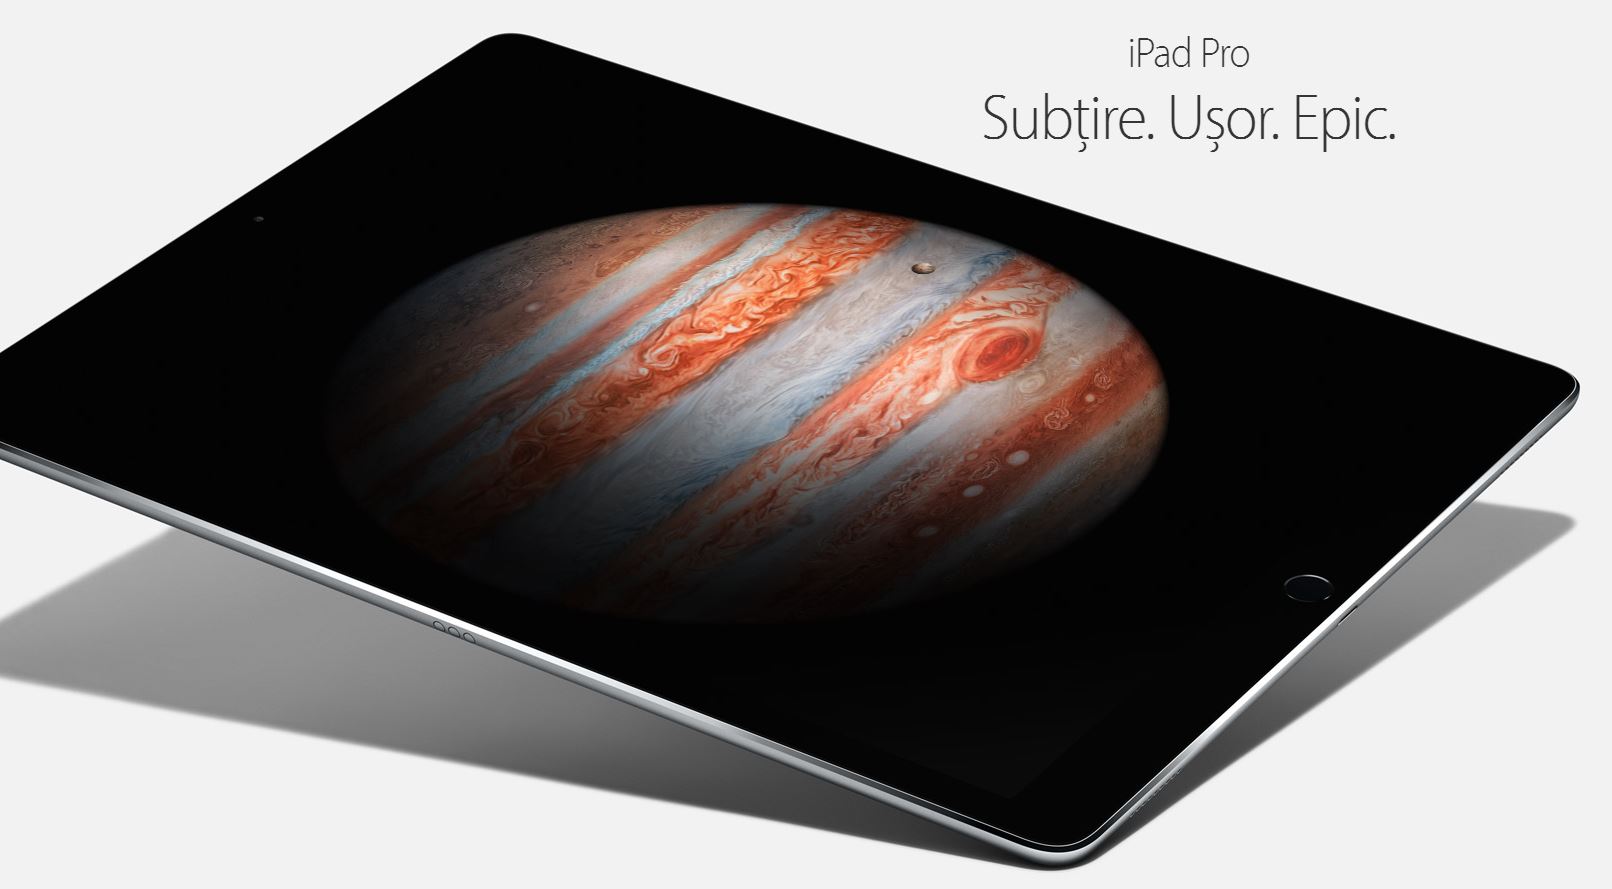 iPad Pro 9.7 inch good screen